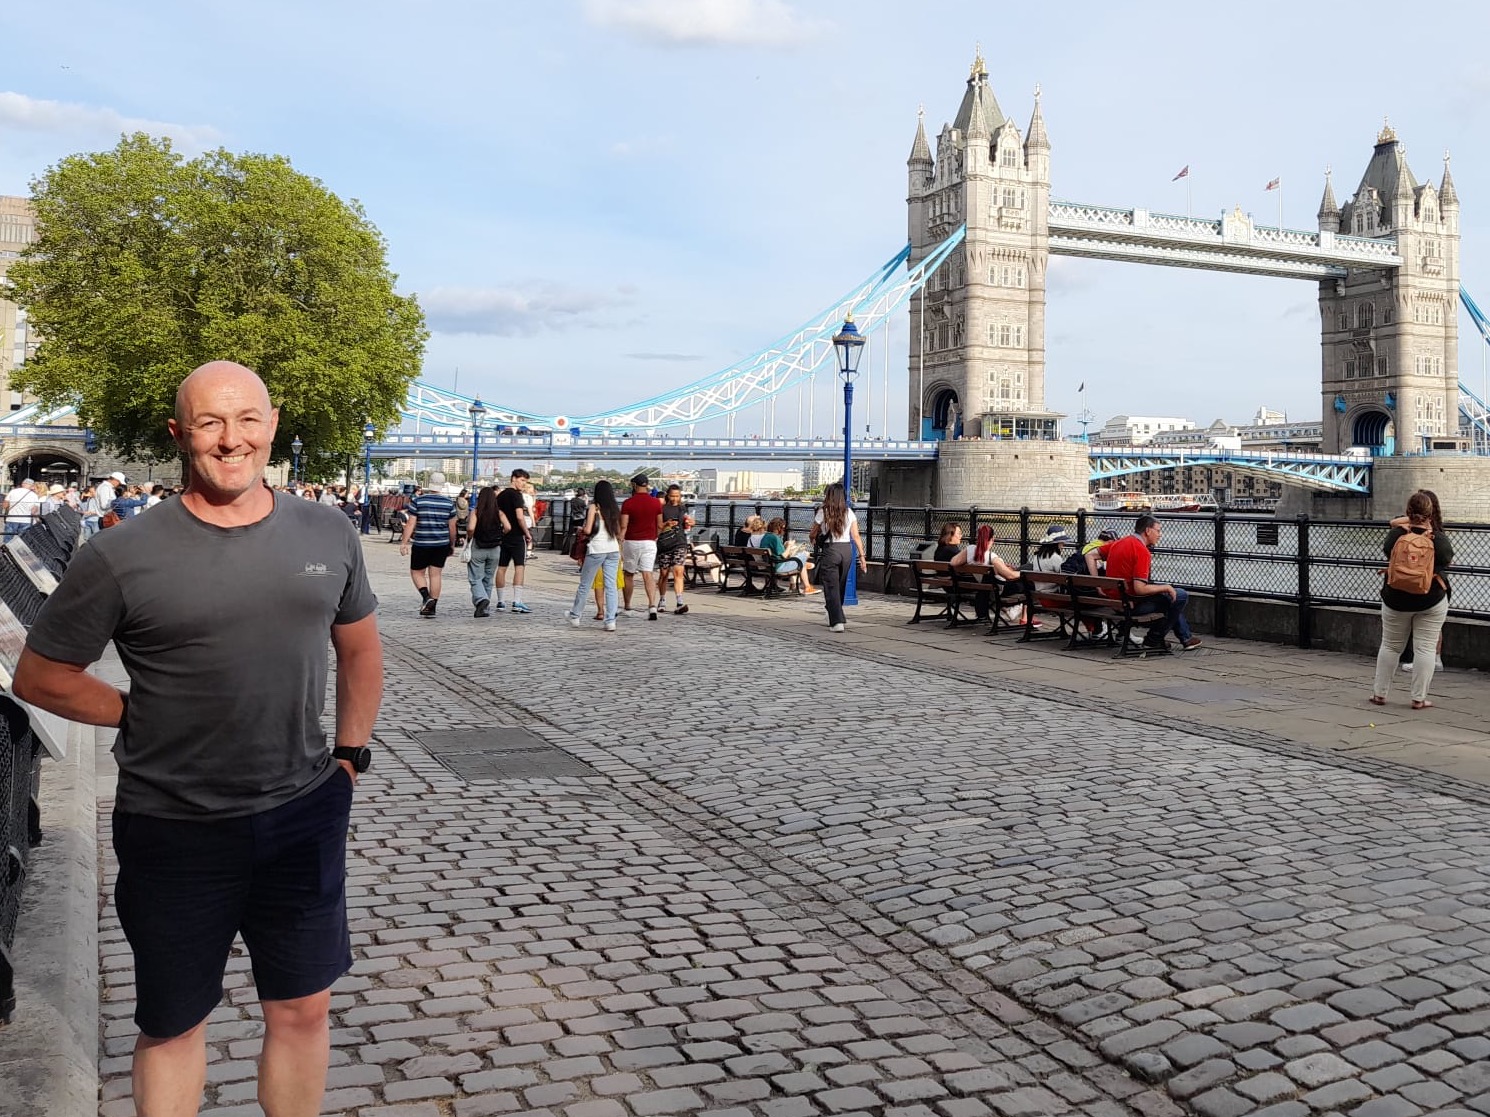 City of London Walk, City of London Walk &#8211; Sky Scrapers, Monuments, Tower of London, Tower Bridge and River Thames, Welsh Man Walking